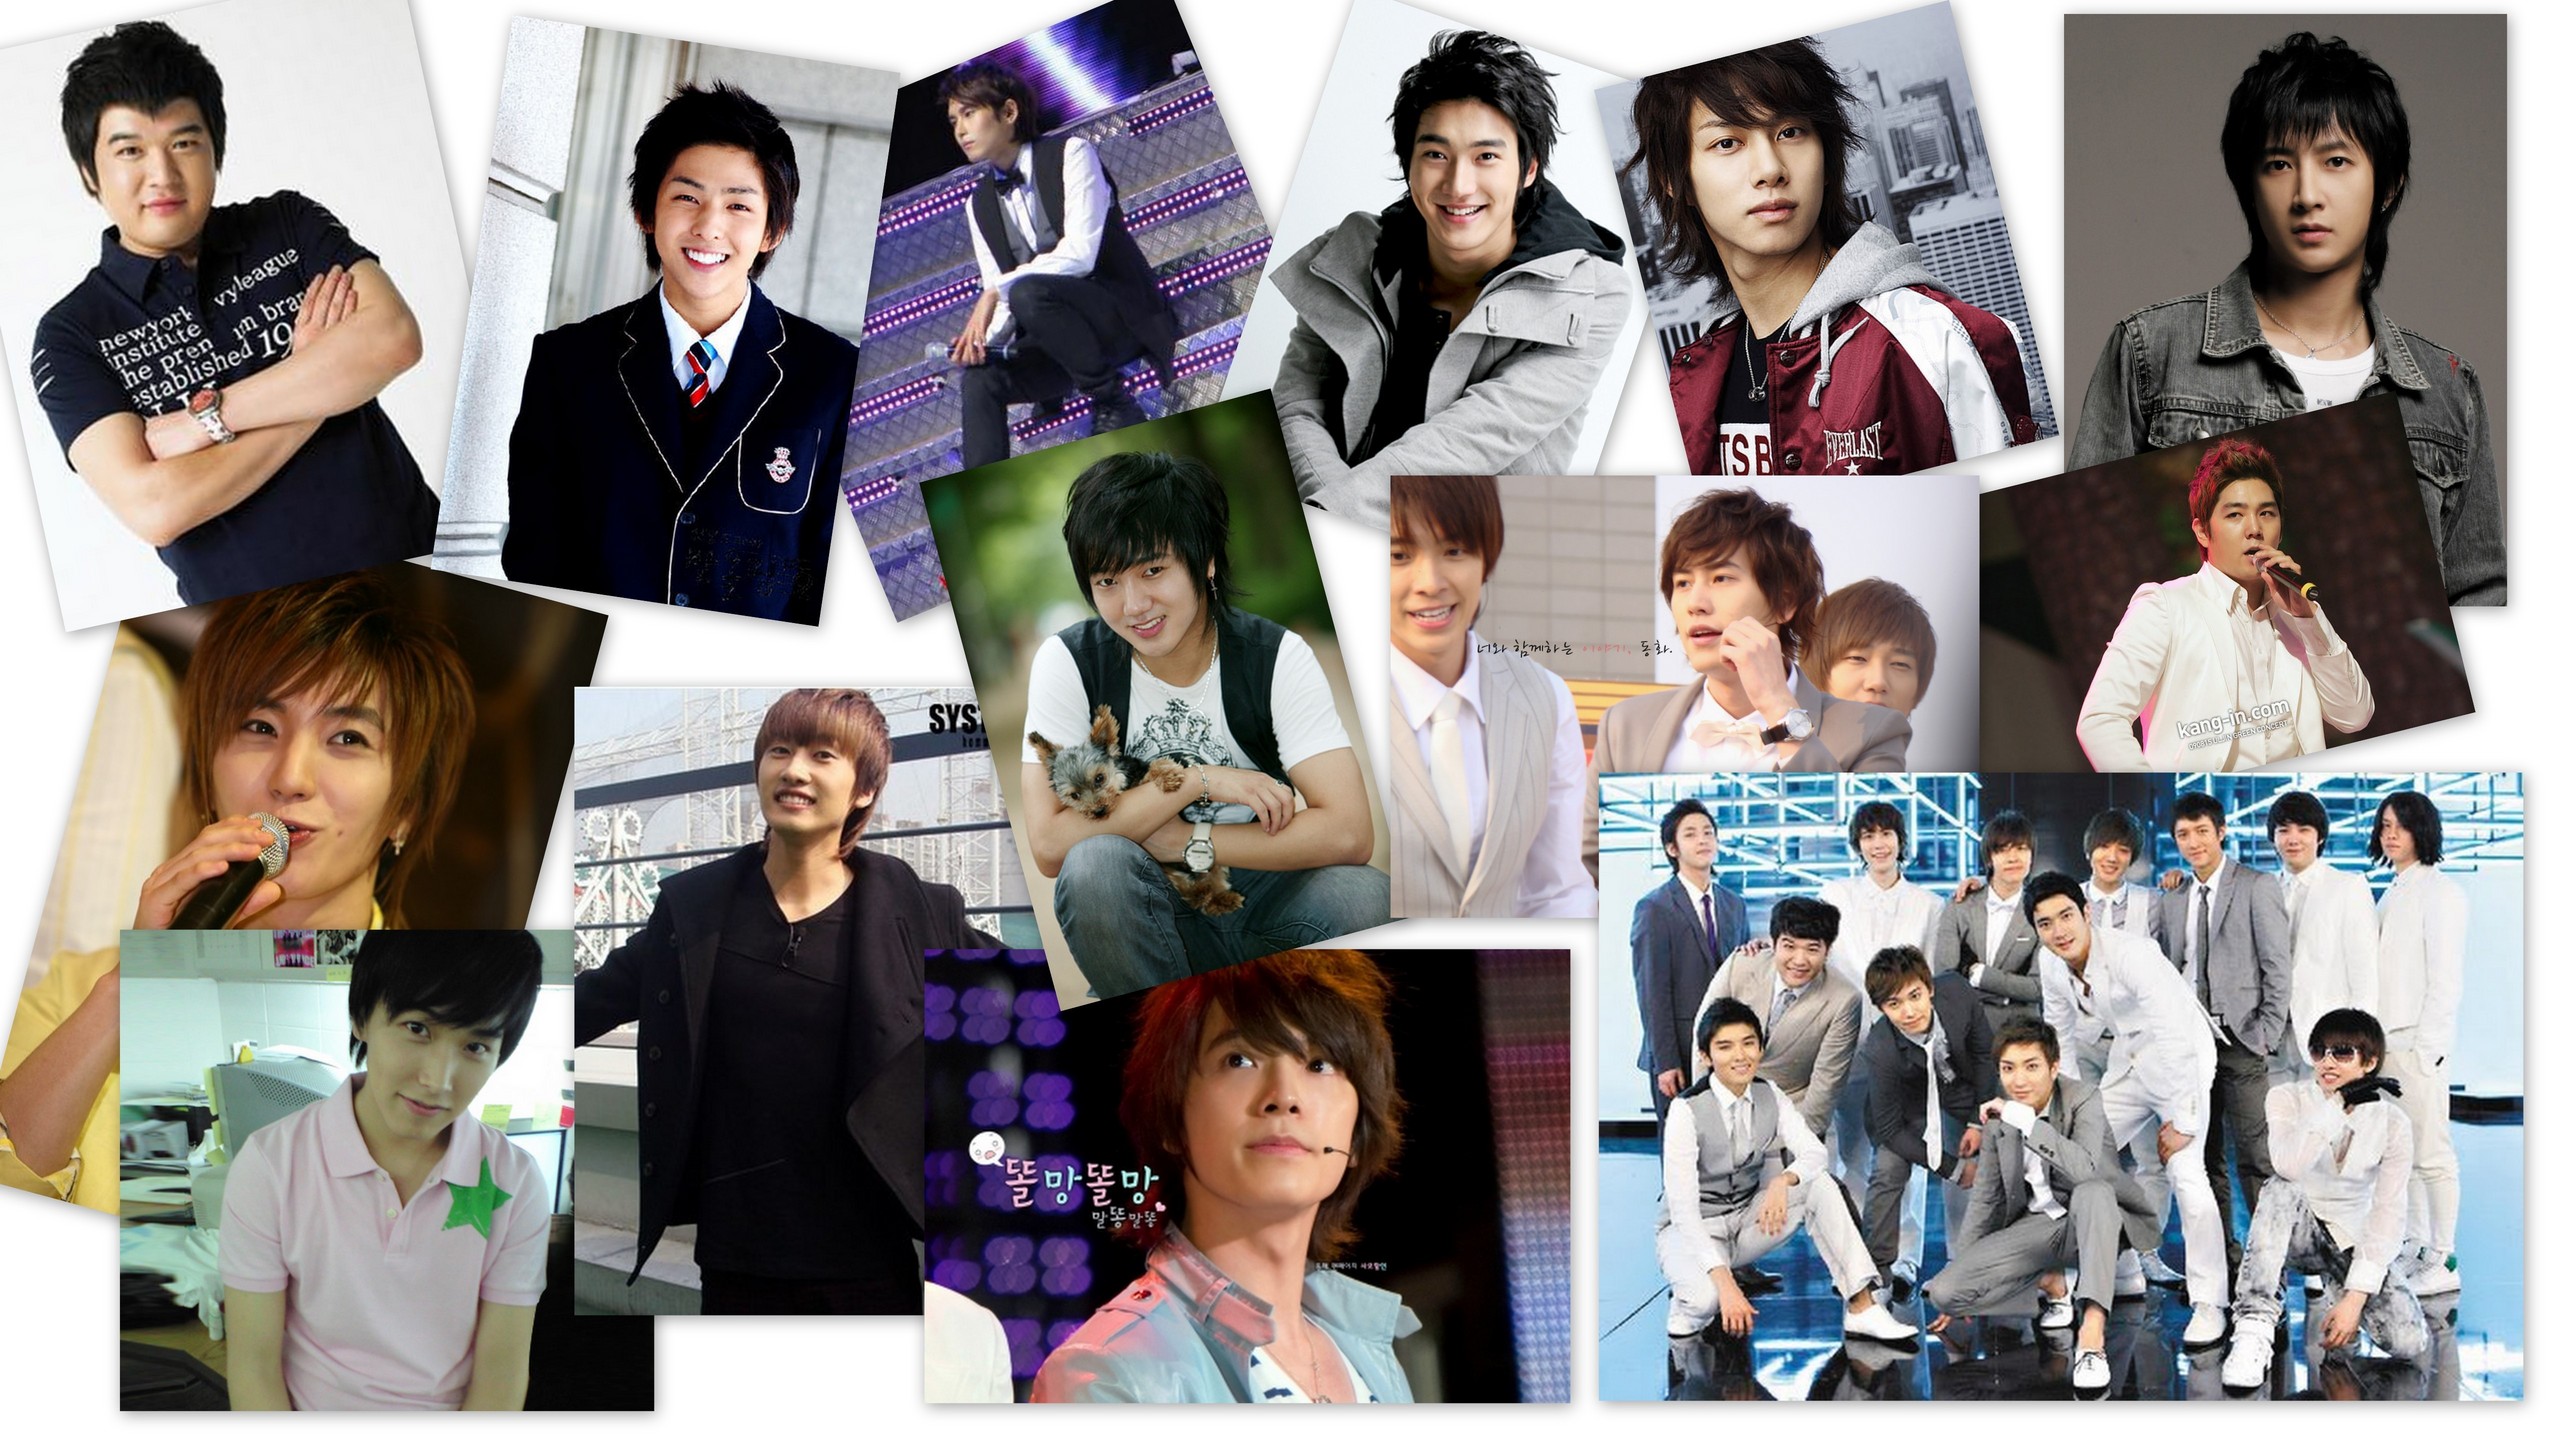 Super Junior 13 Forever - Super Junior Wallpaper 15300850 - Fanpop